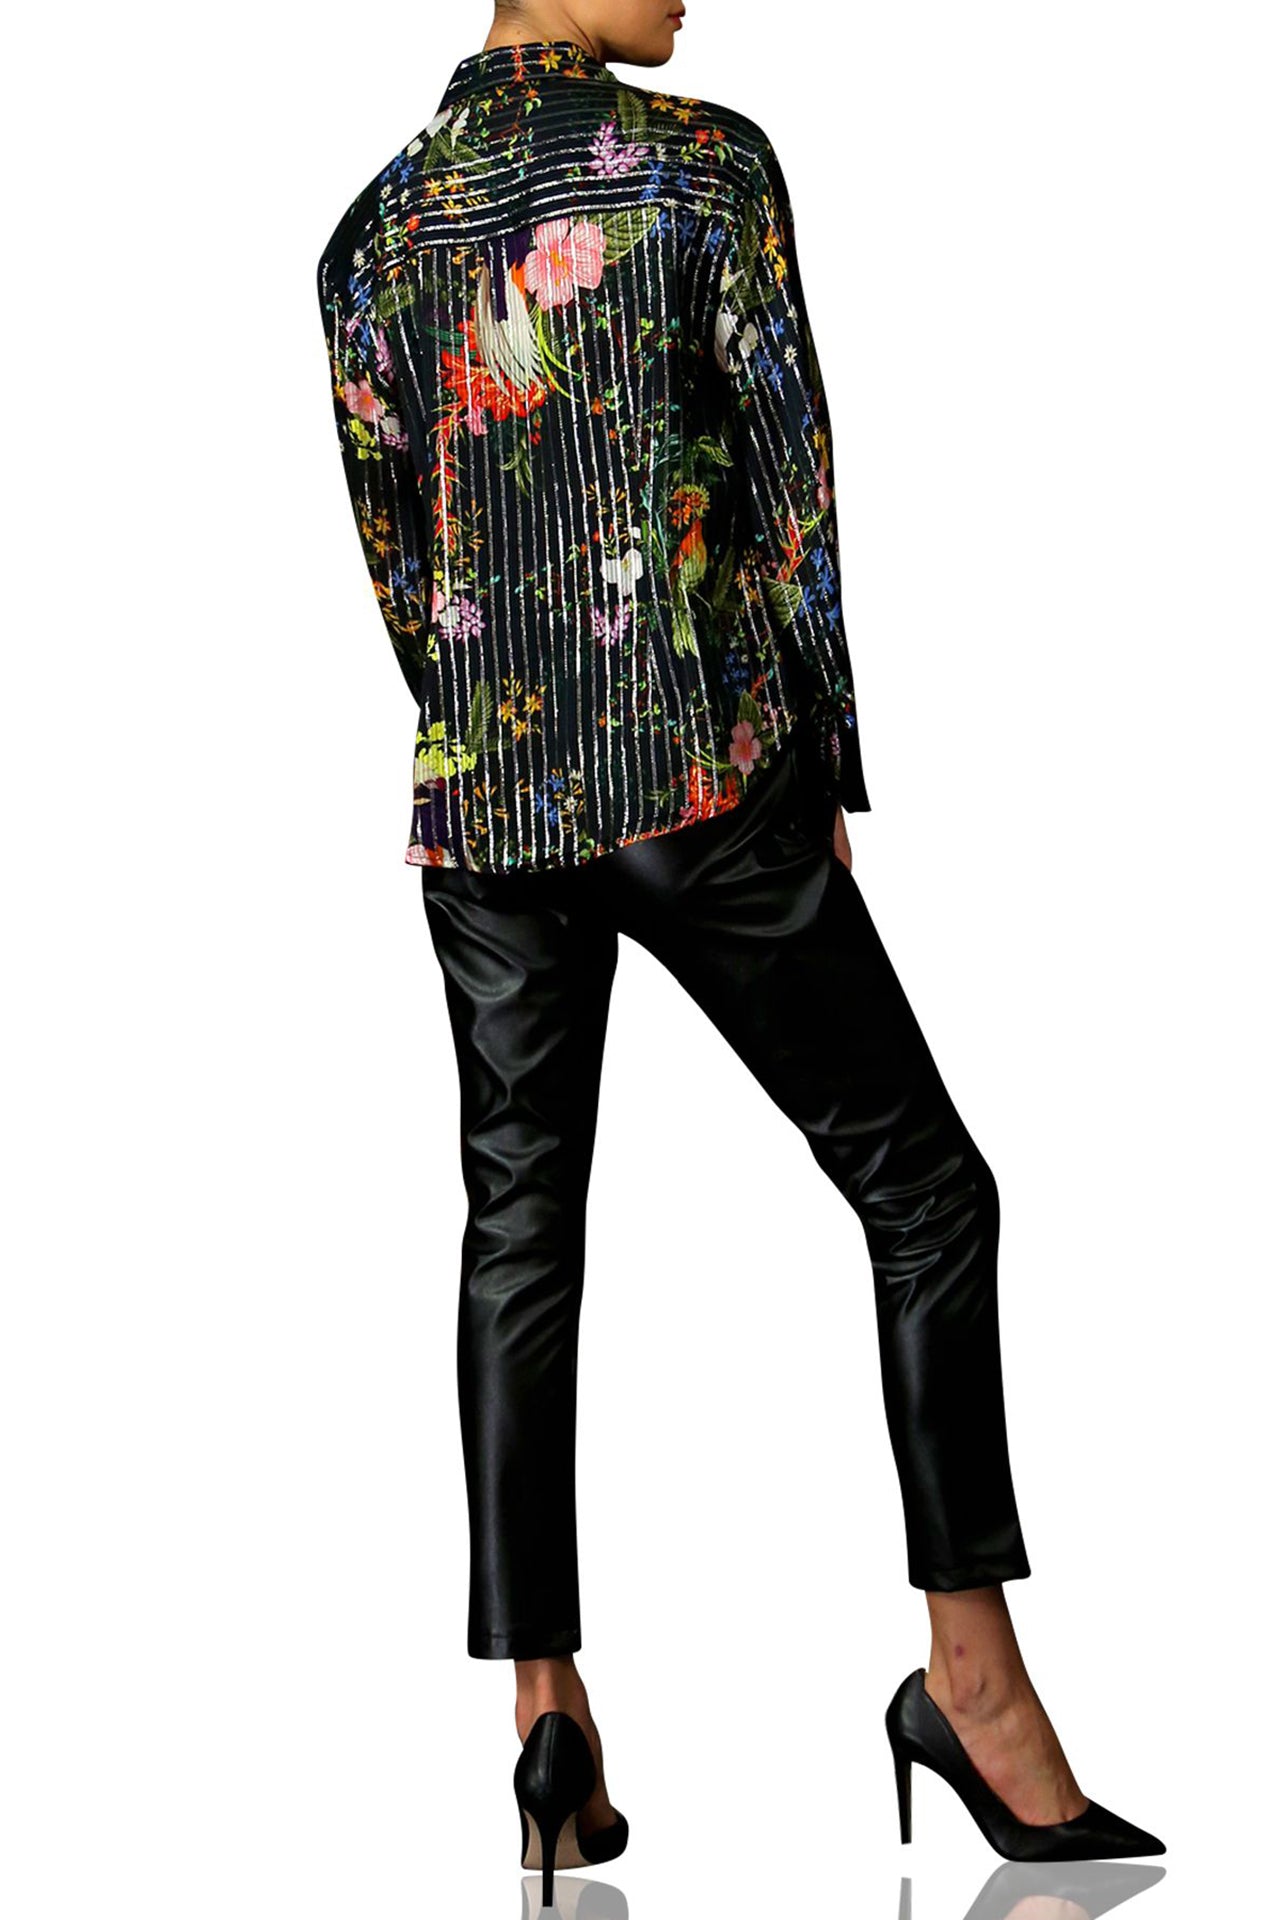 "floral print shirt" "bird print shirt," "Kyle X Shahida" black shirts for women"